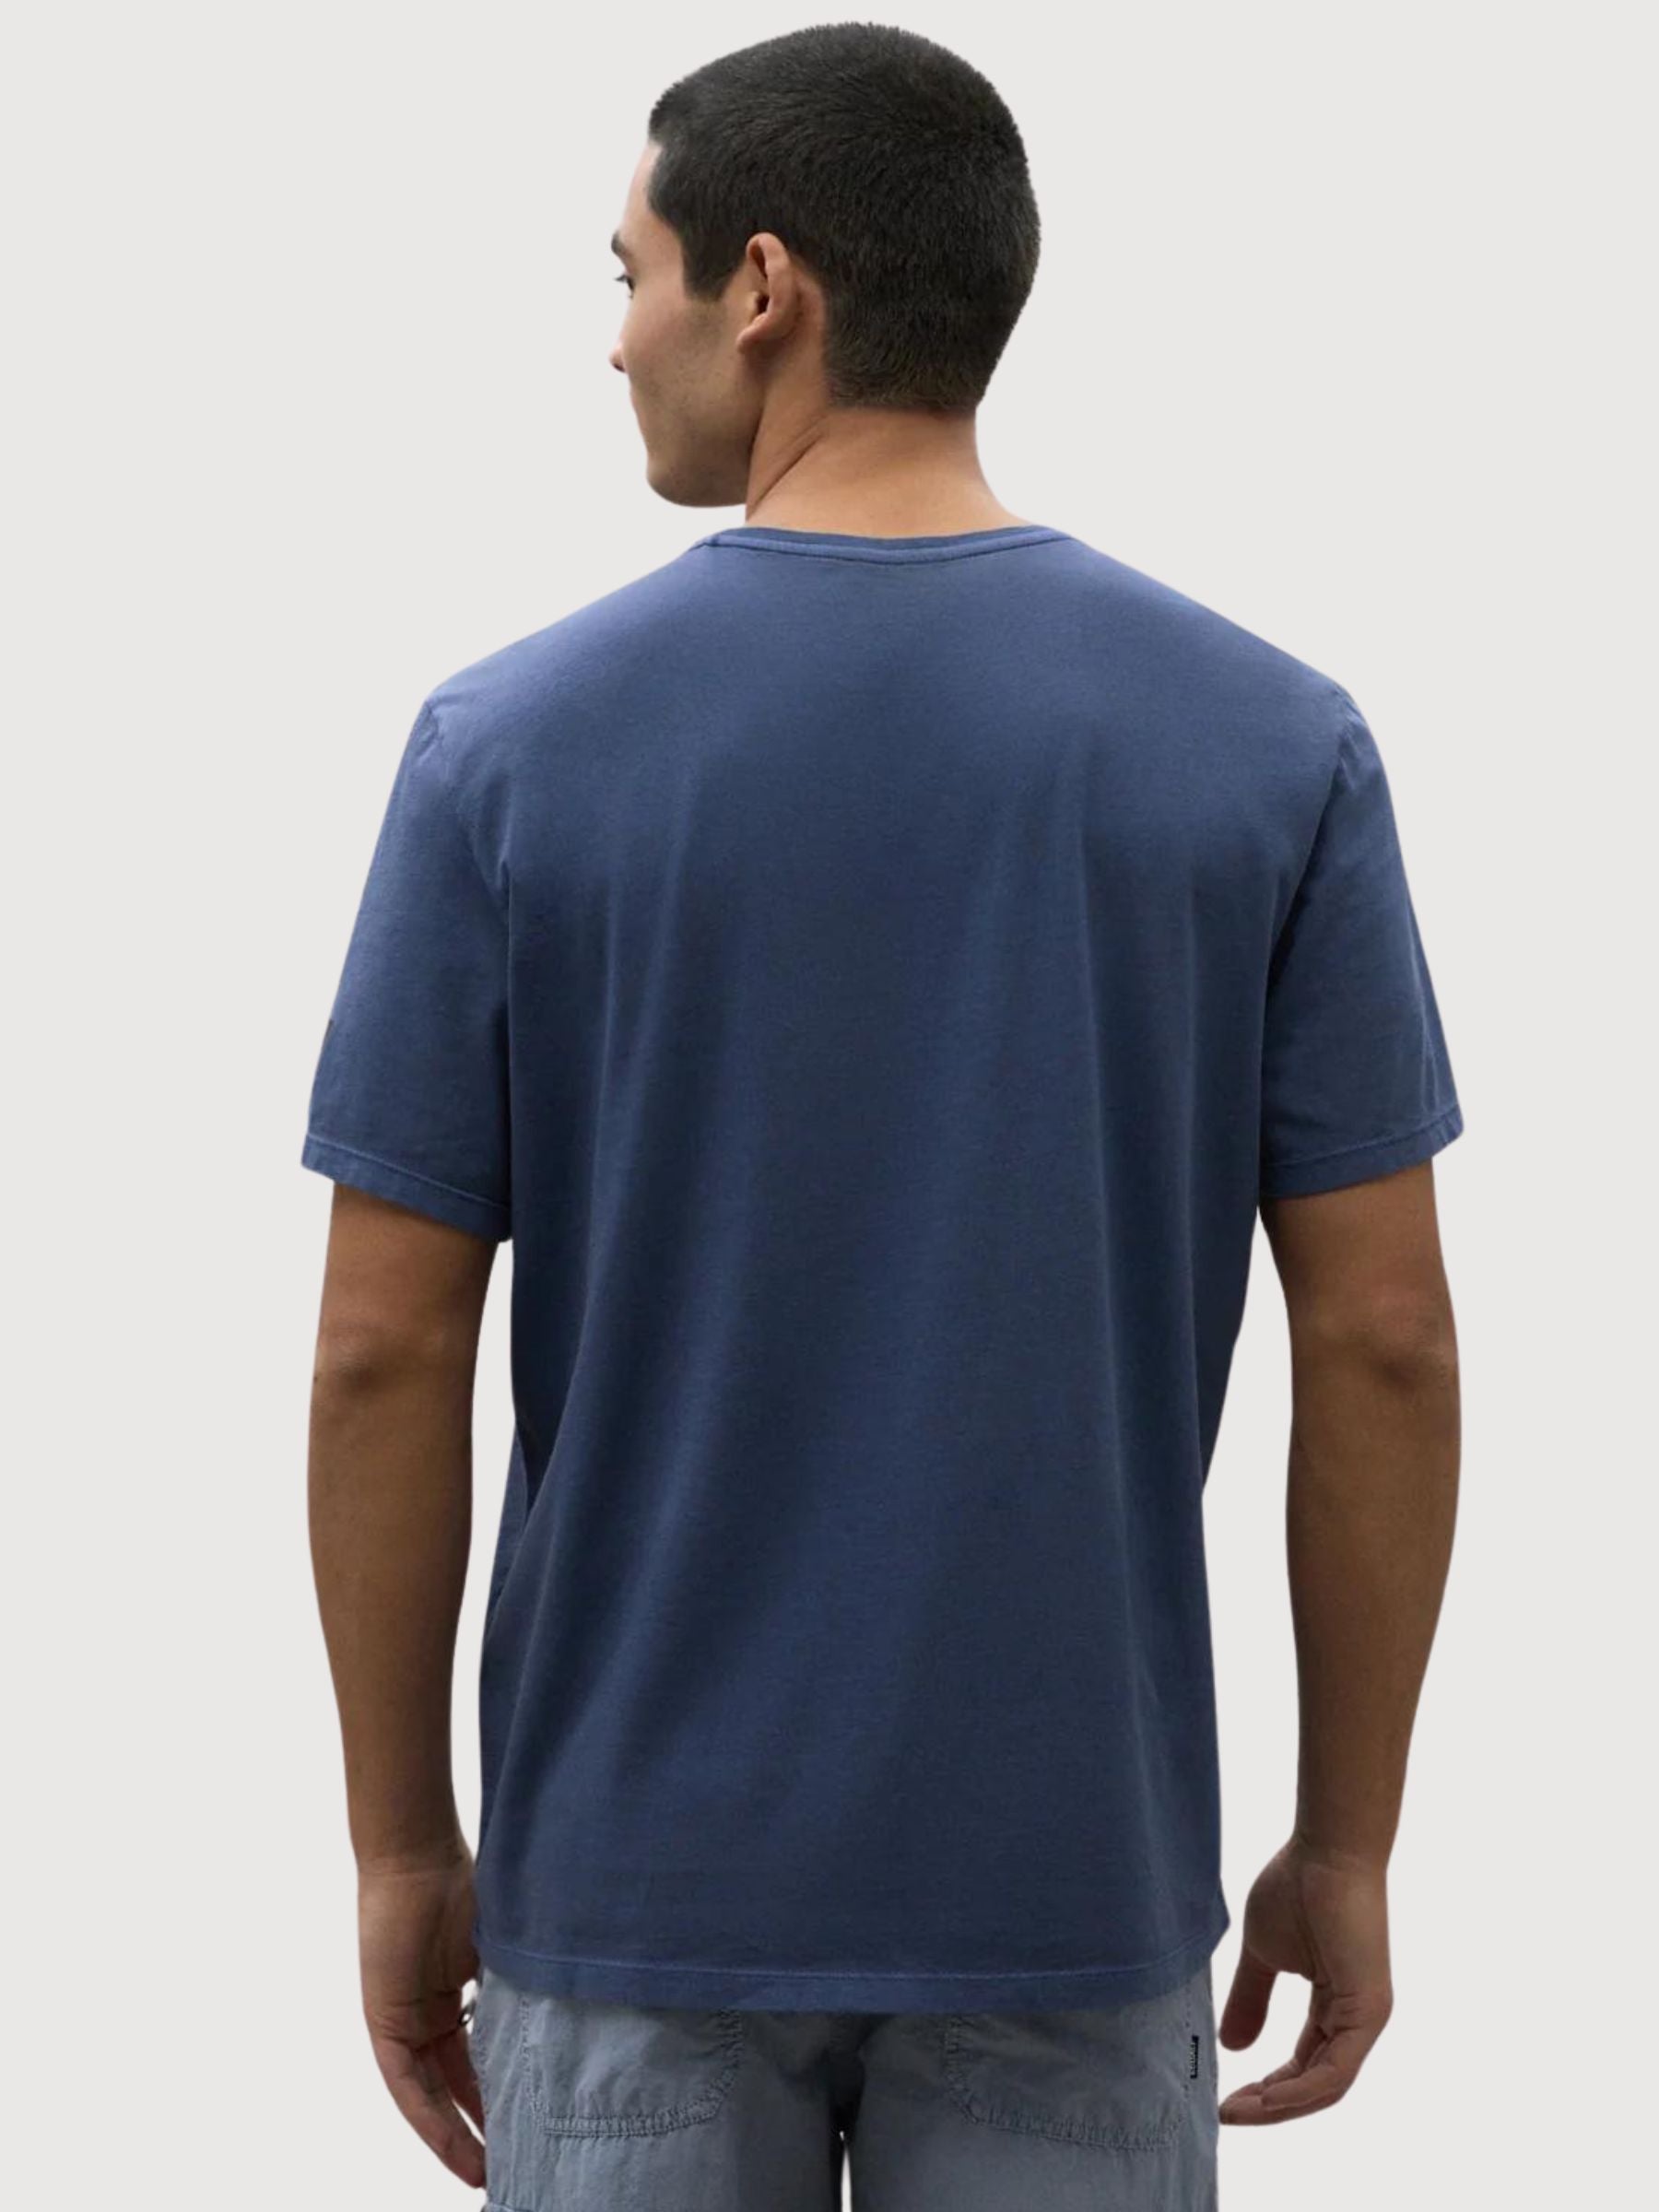 T-Shirt Vent Blau aus recycelter Baumwolle | Ecoalf